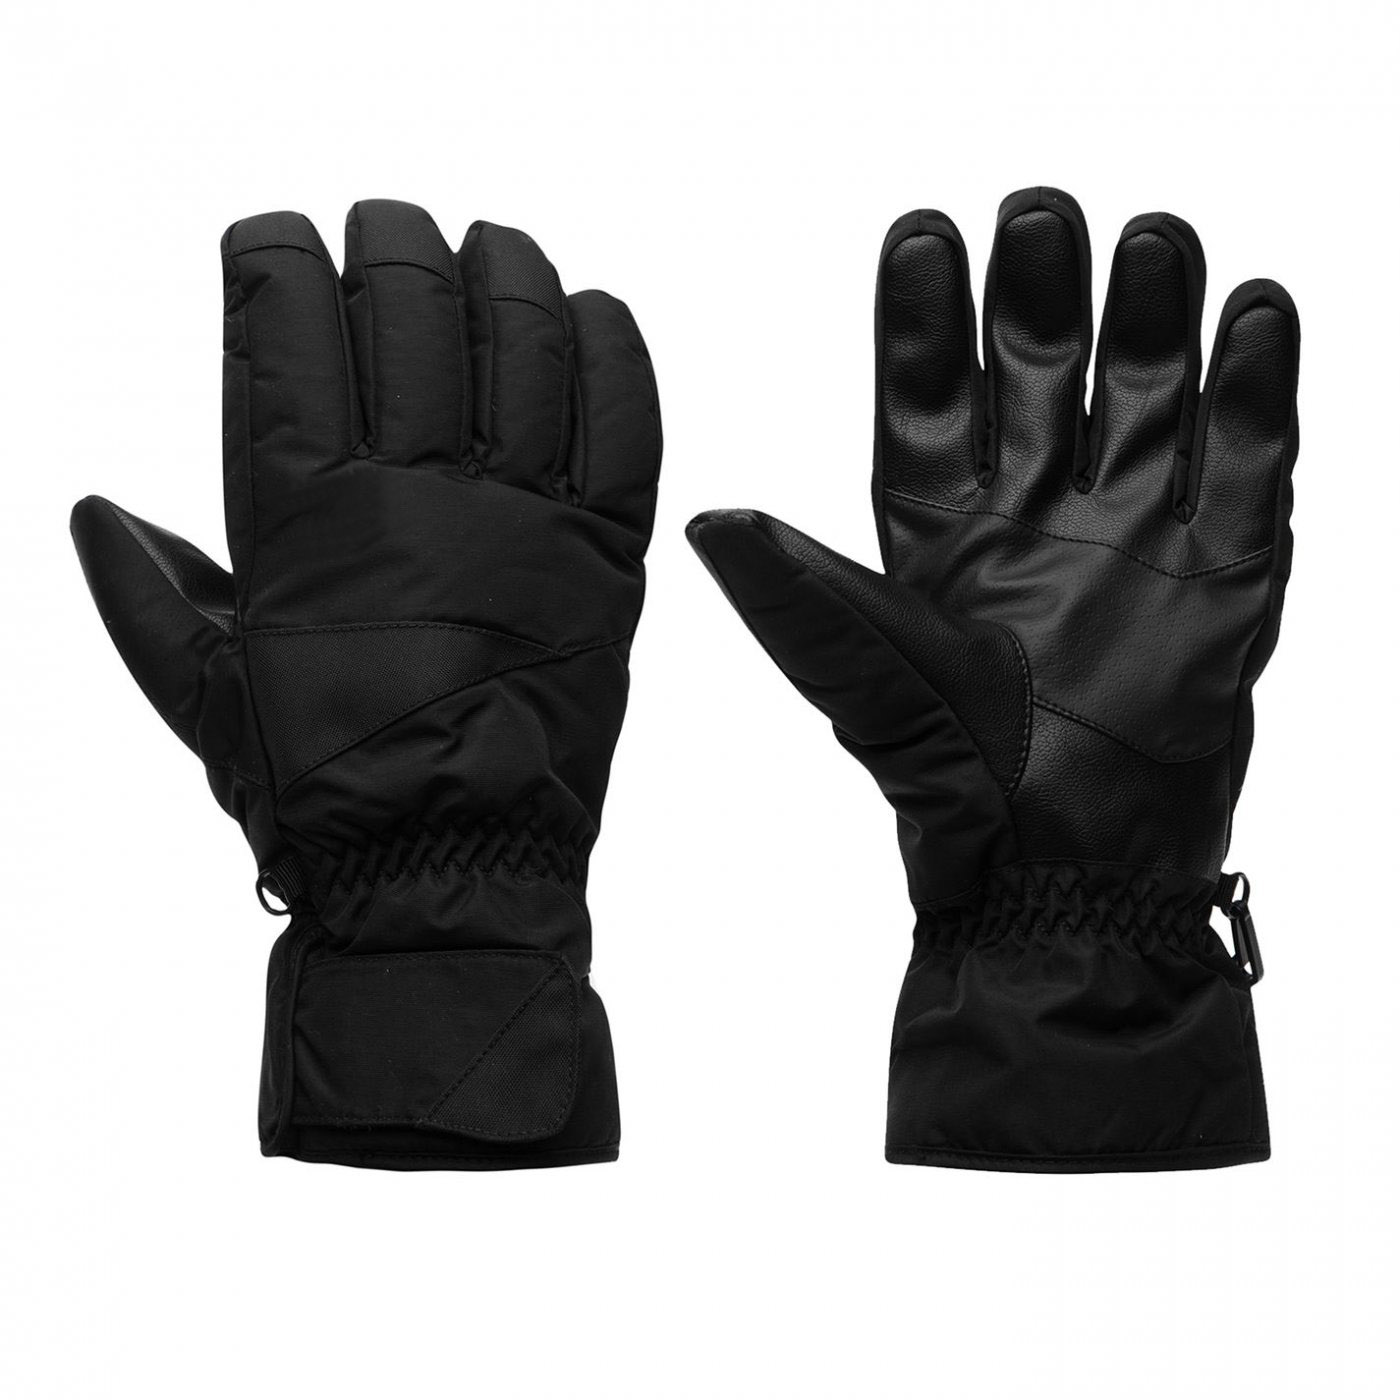 Mens ski gloves soft shell fleece warm lightweight winter snowboarding gloves